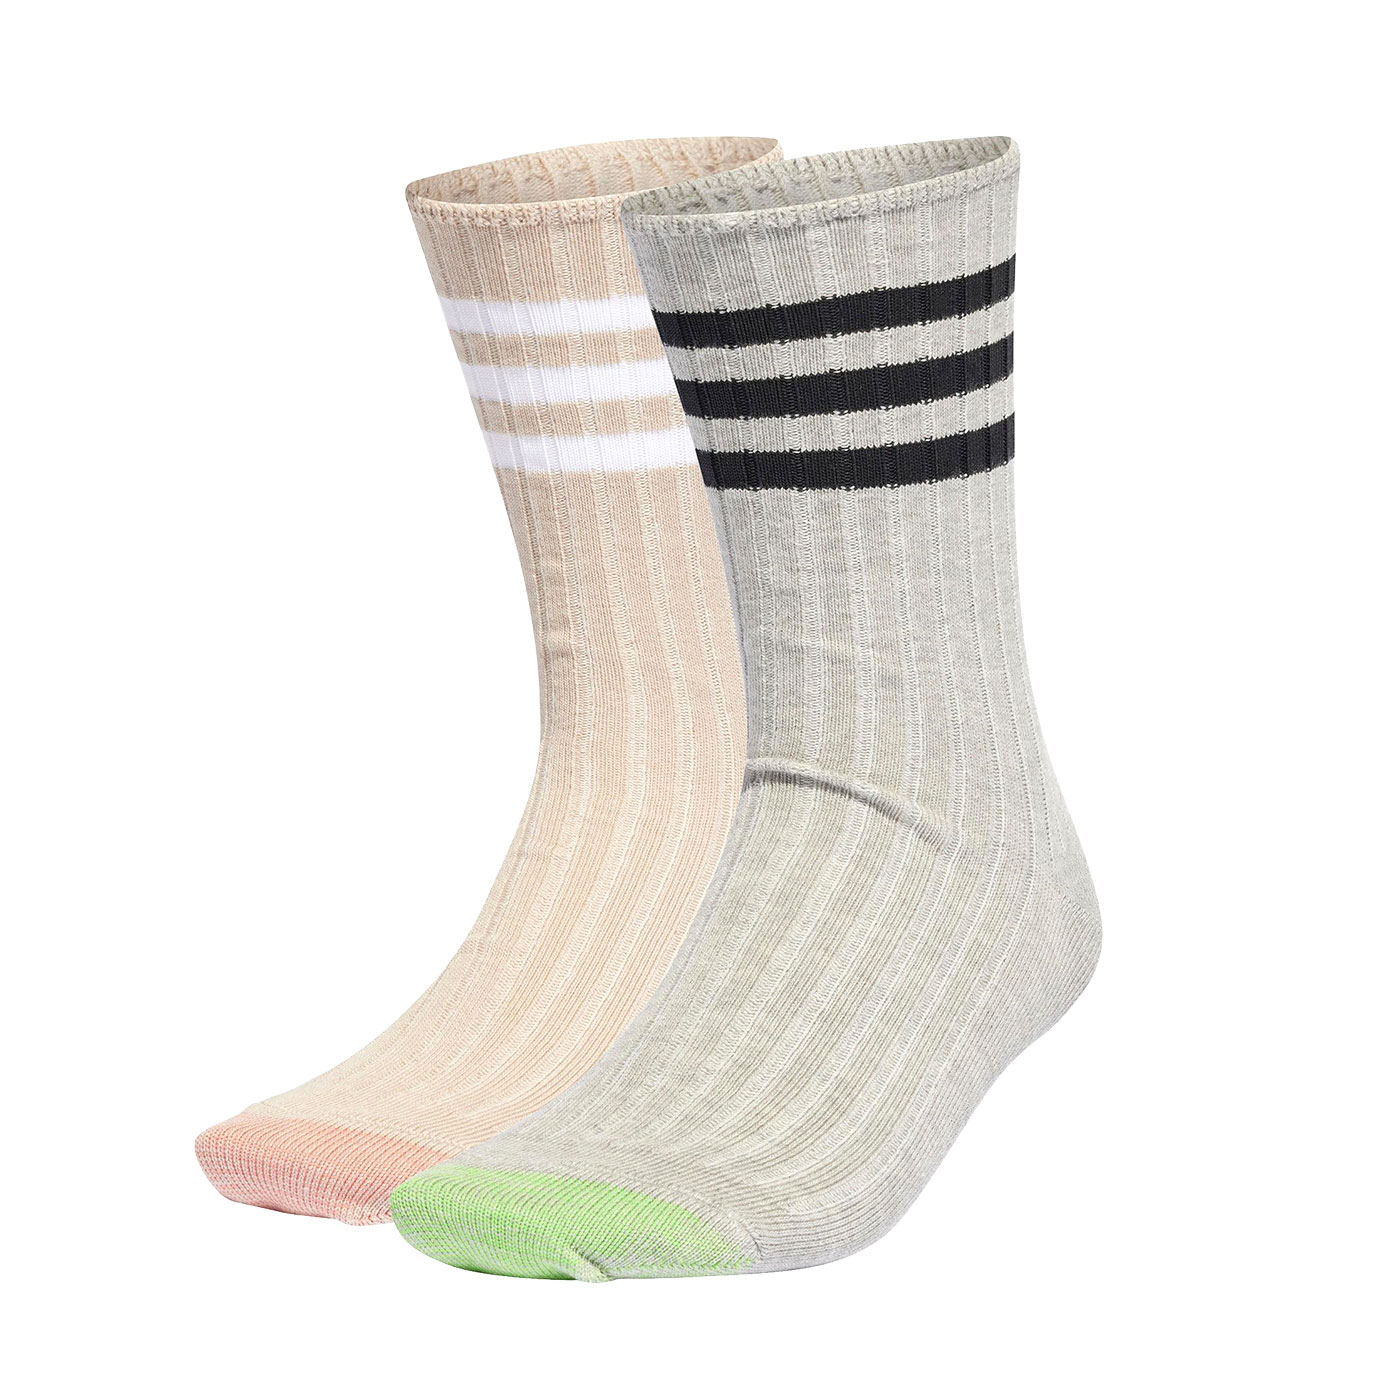 ADIDAS 襪子(兩雙入)  IB3272 - 灰黑棕白紅